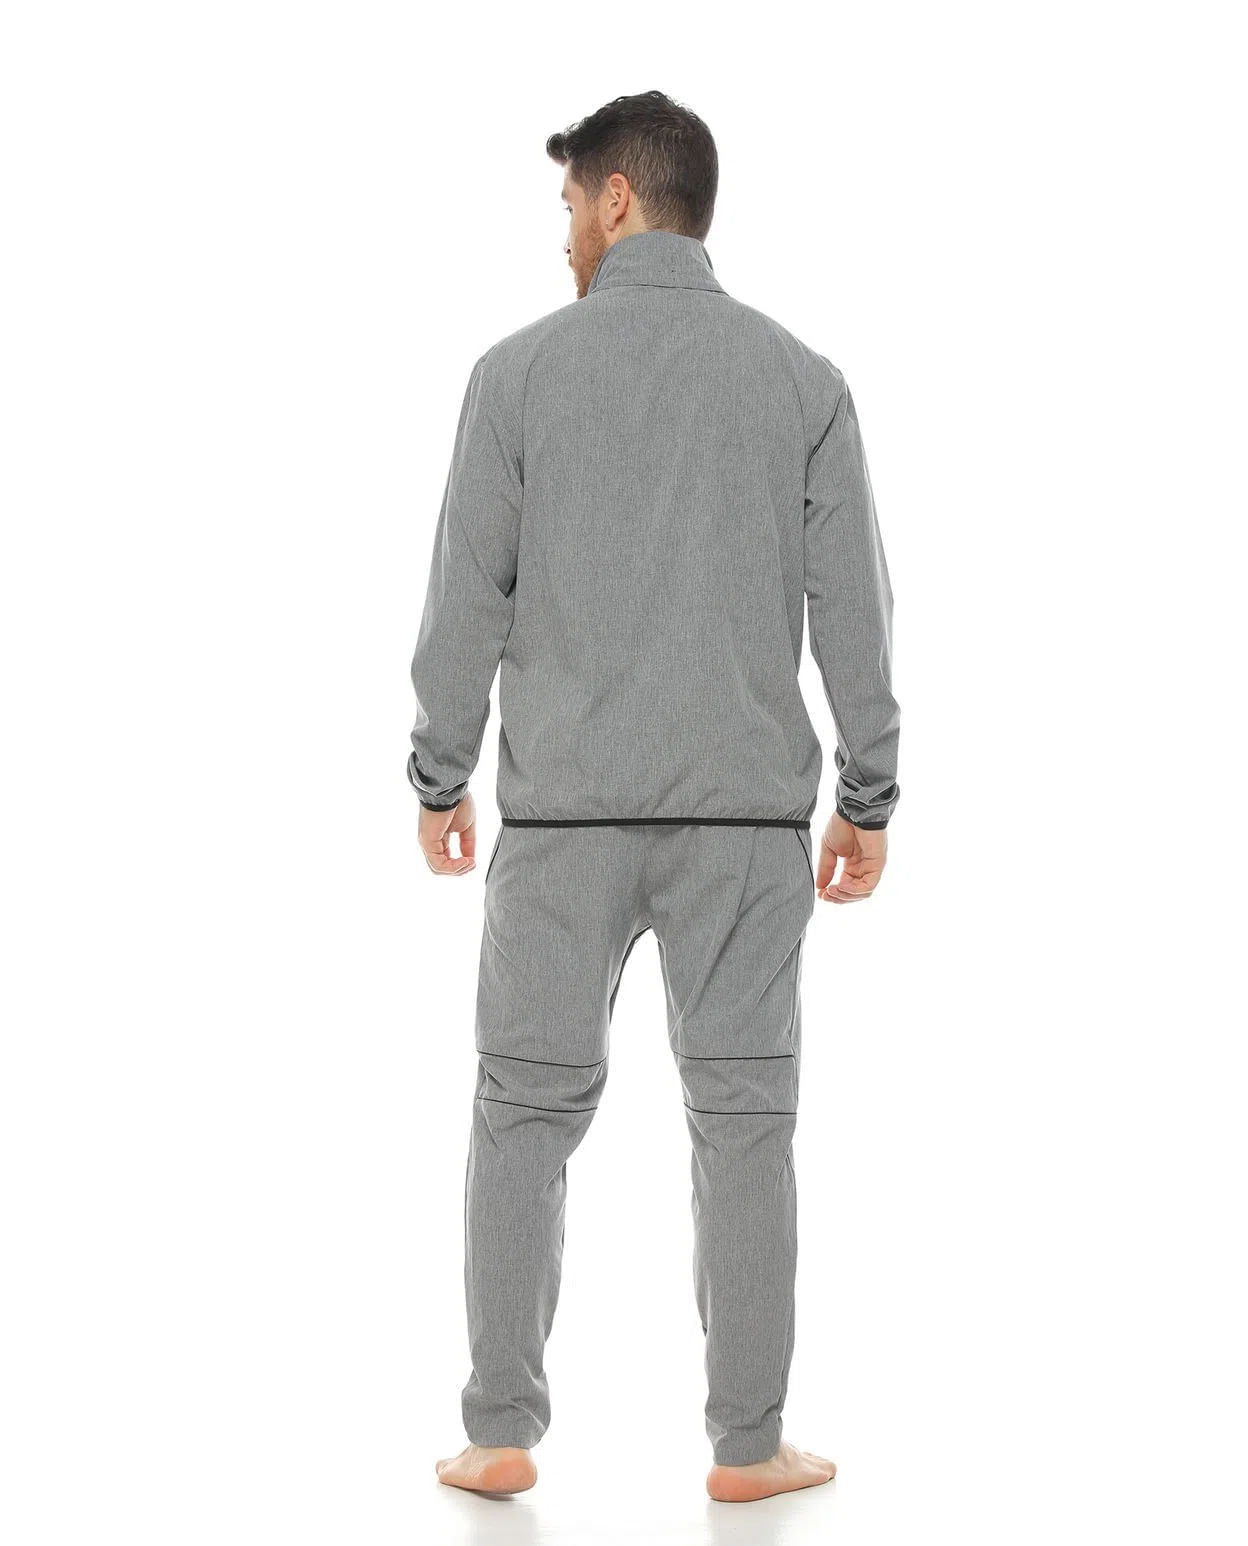 modelo-con-Pantalon-Deportivo-Jaspe-y-chaqueta-autoguardable-para-Hombre-parte-trasera